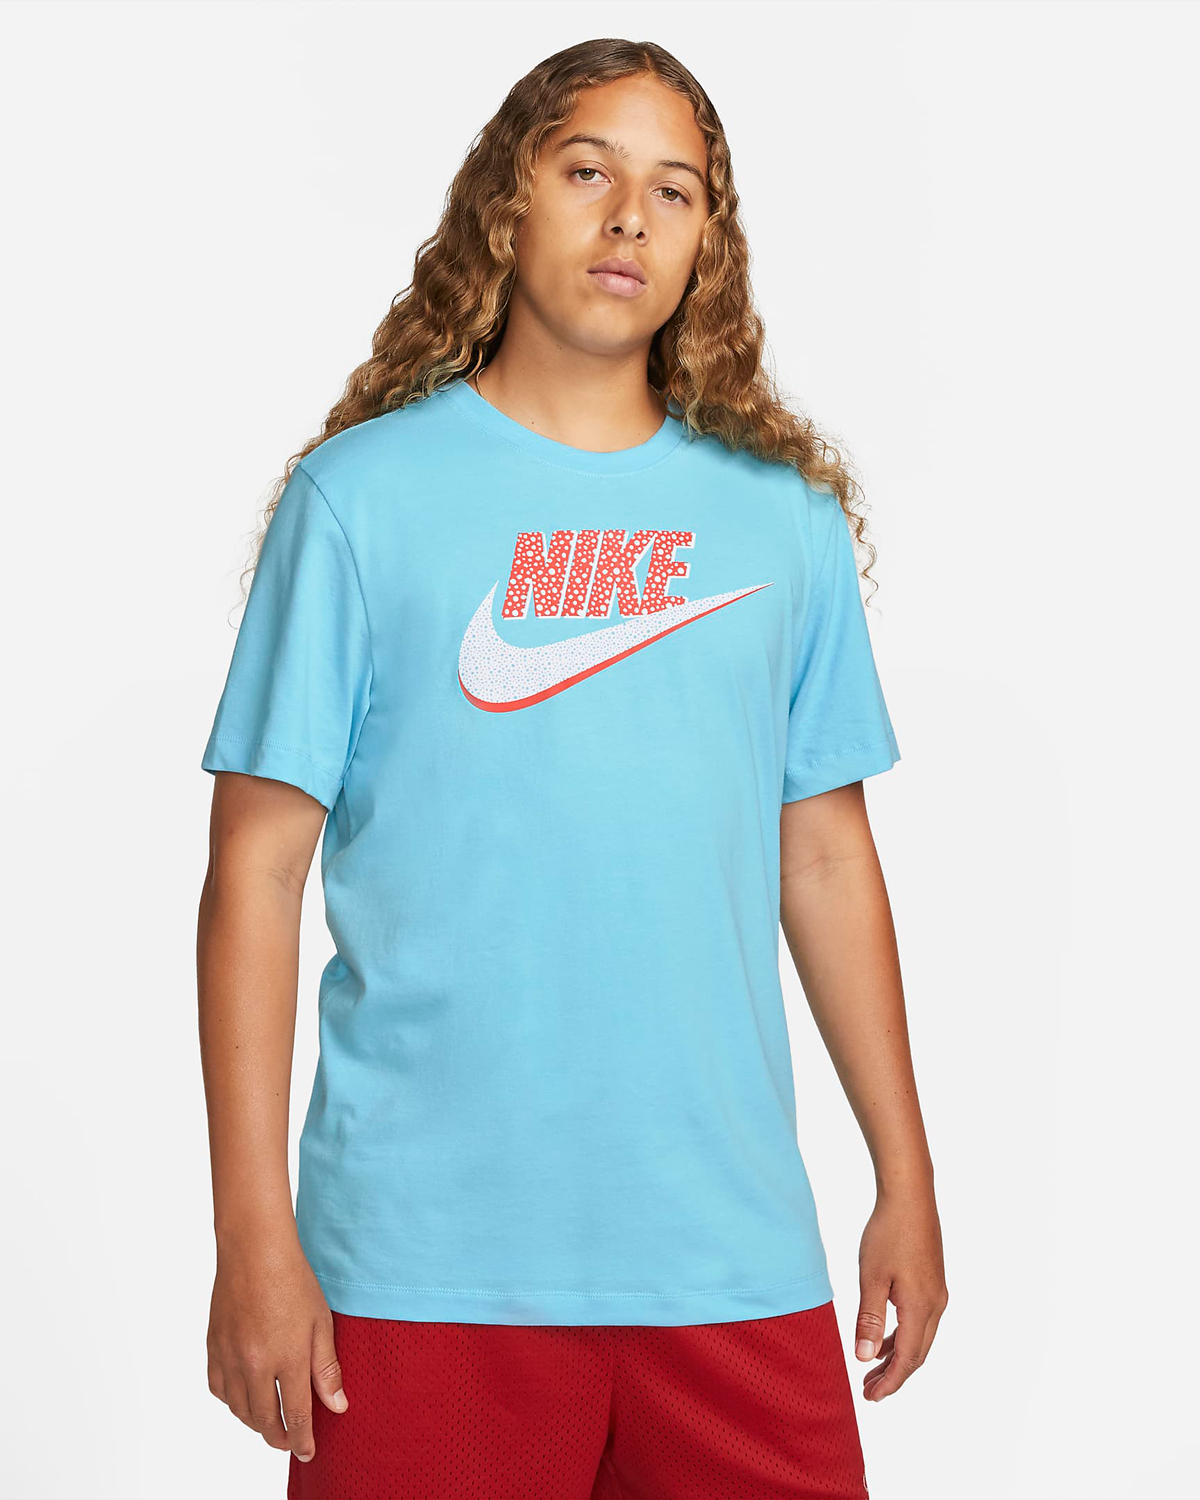 Nike-Blue-Chill-T-Shirt-1